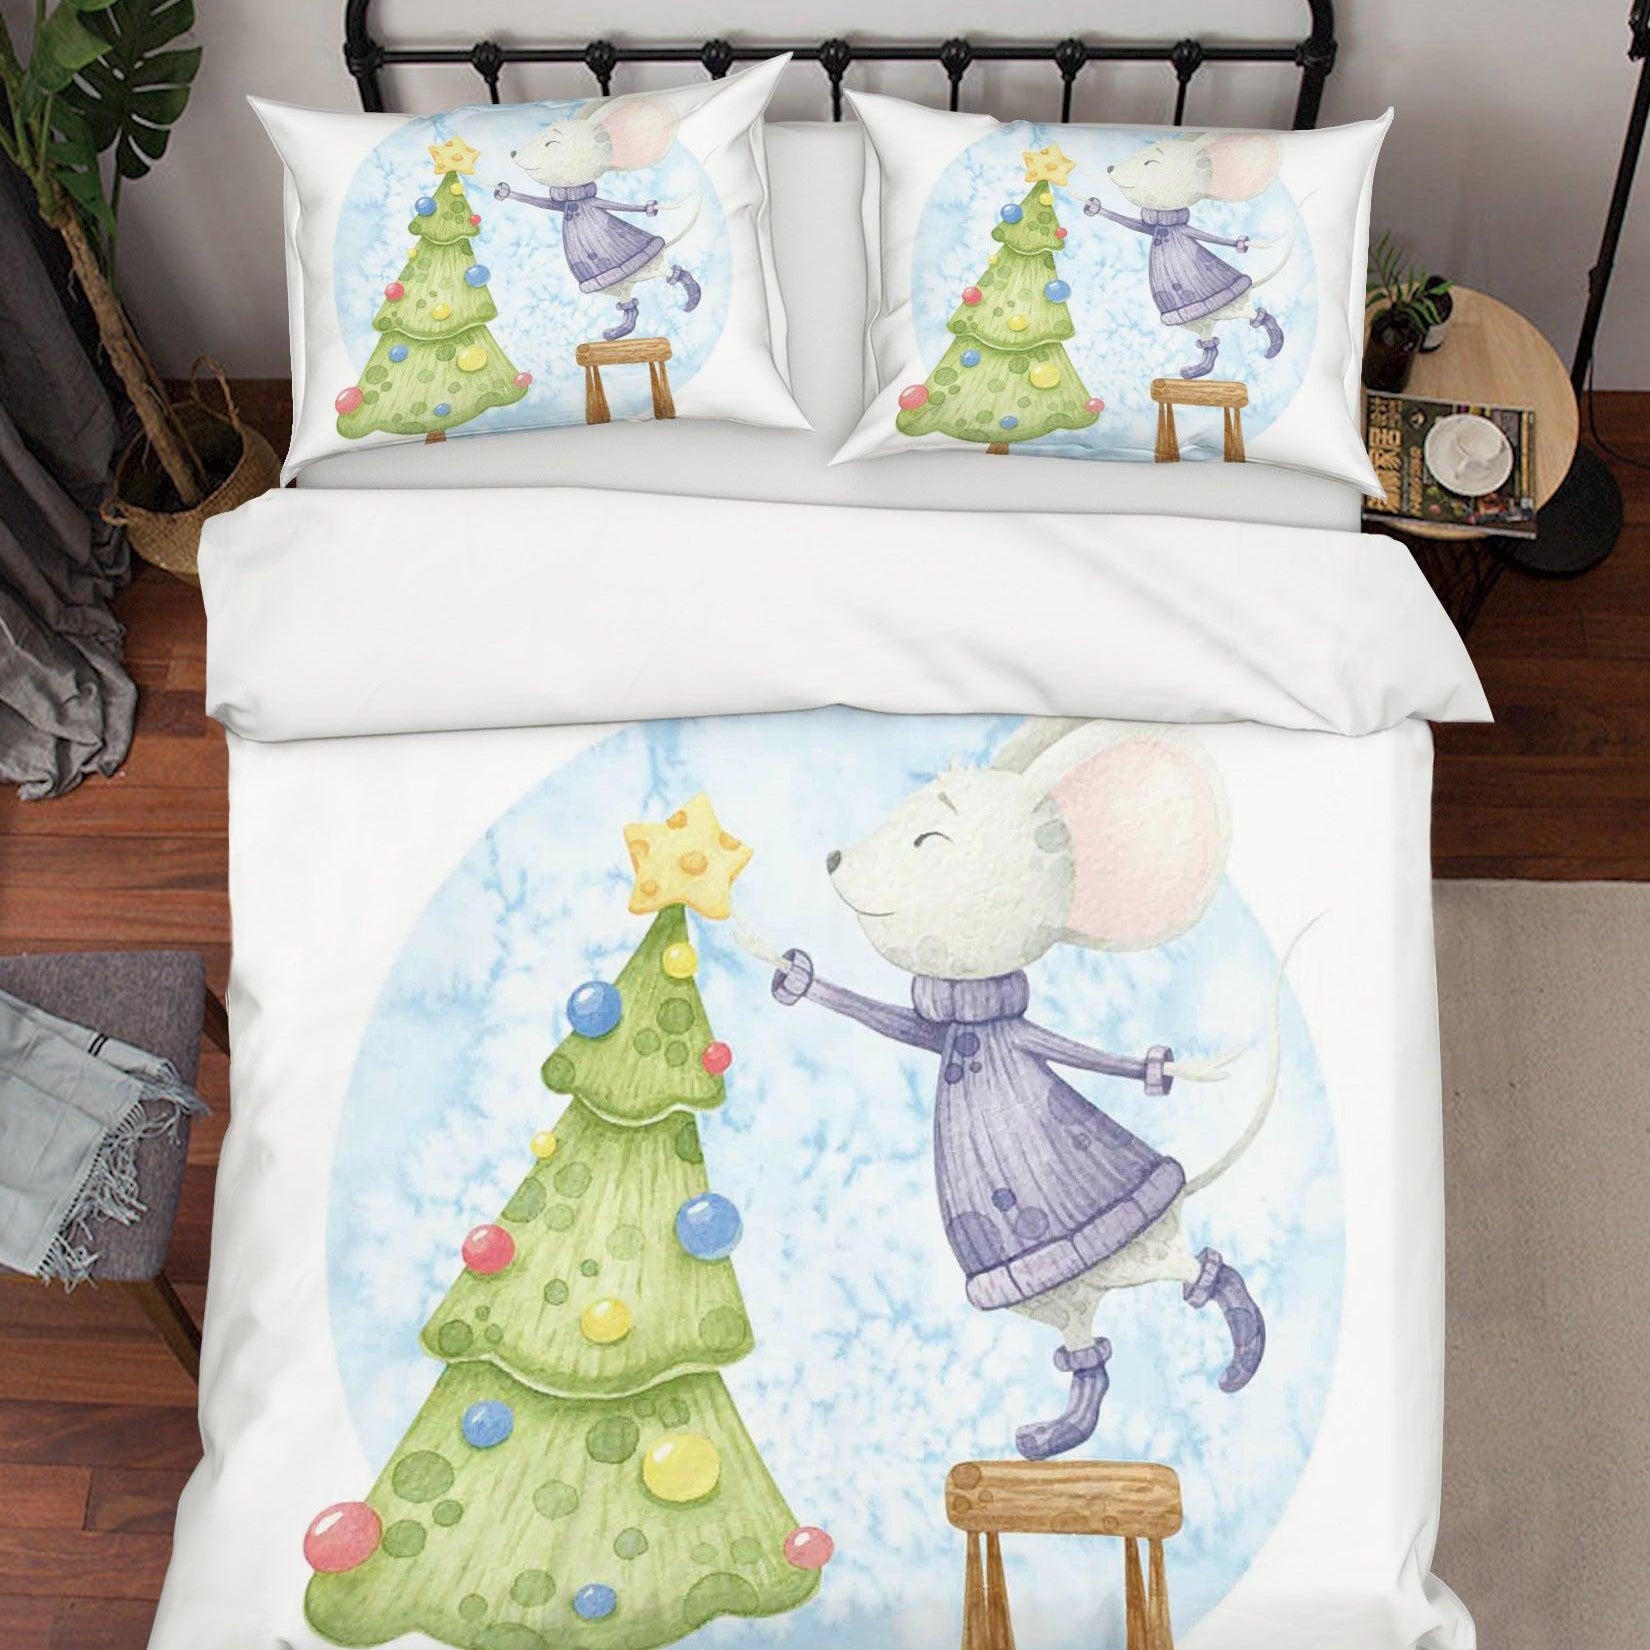 3D White Christmas Tree Mouse Quilt Cover Set Bedding Set Duvet Cover Pillowcases SF21- Jess Art Decoration